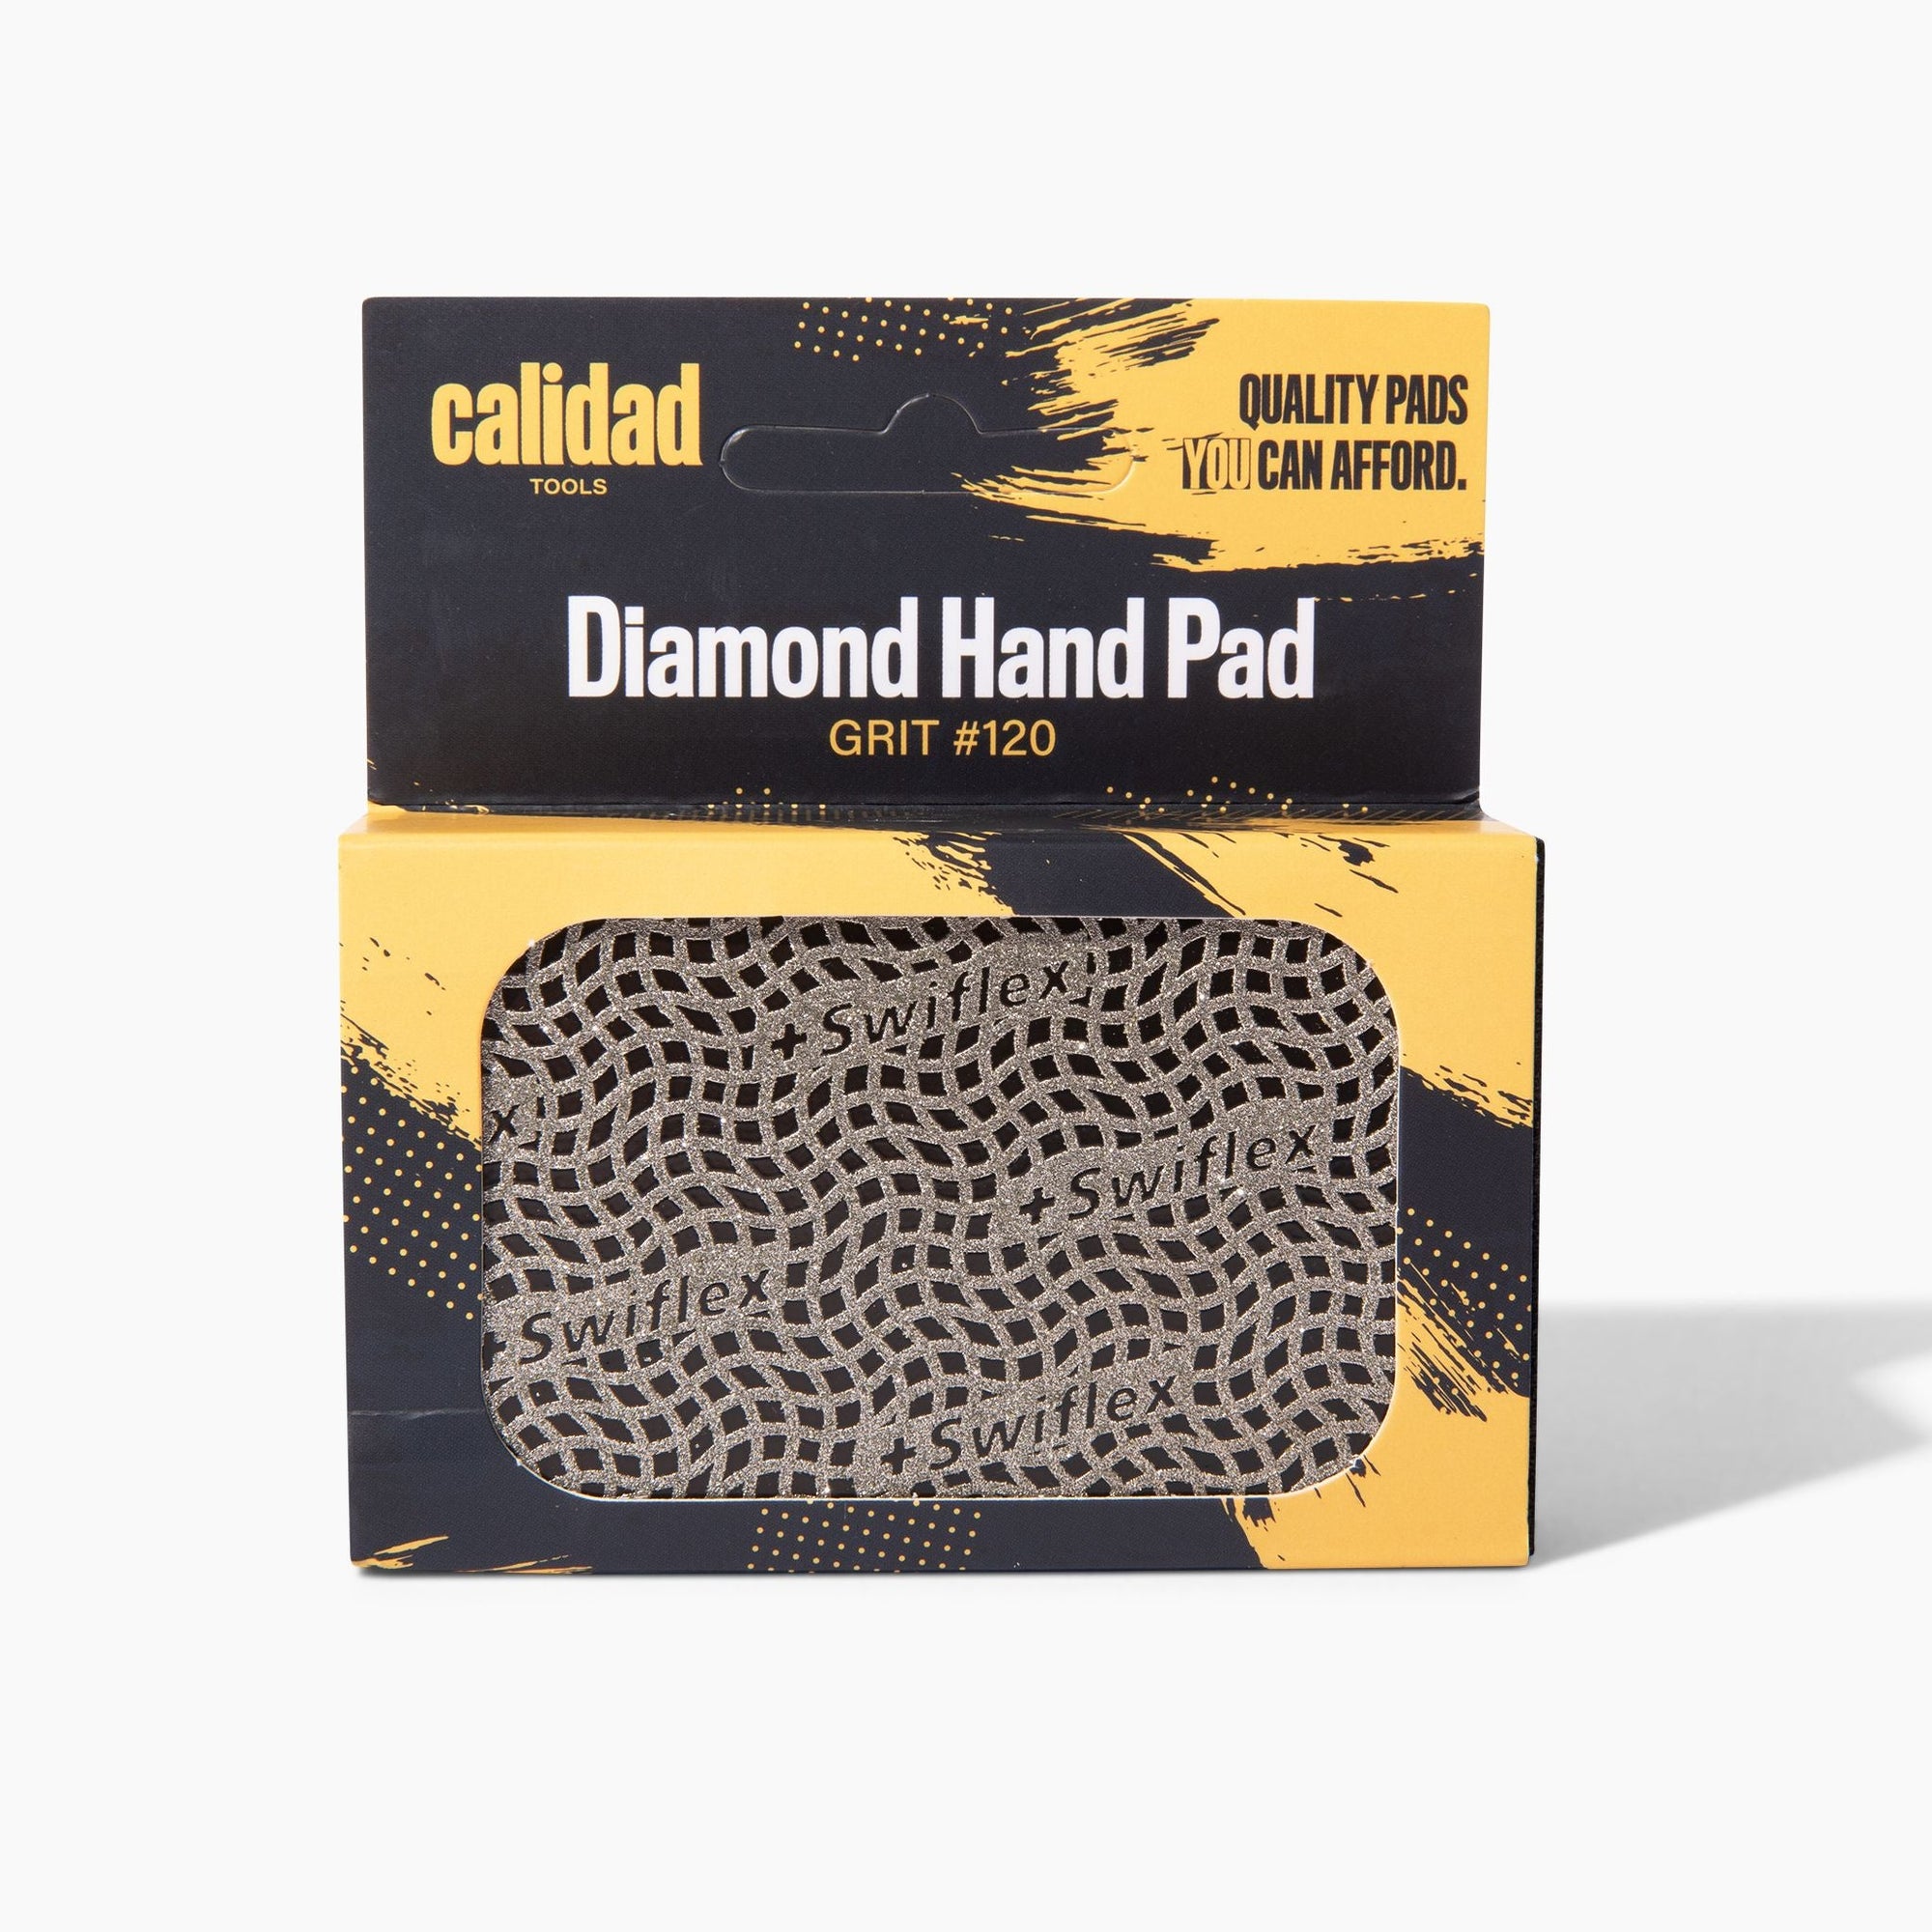 Calidad Diamond Hand Pad Grit #120 - Calidad Tools